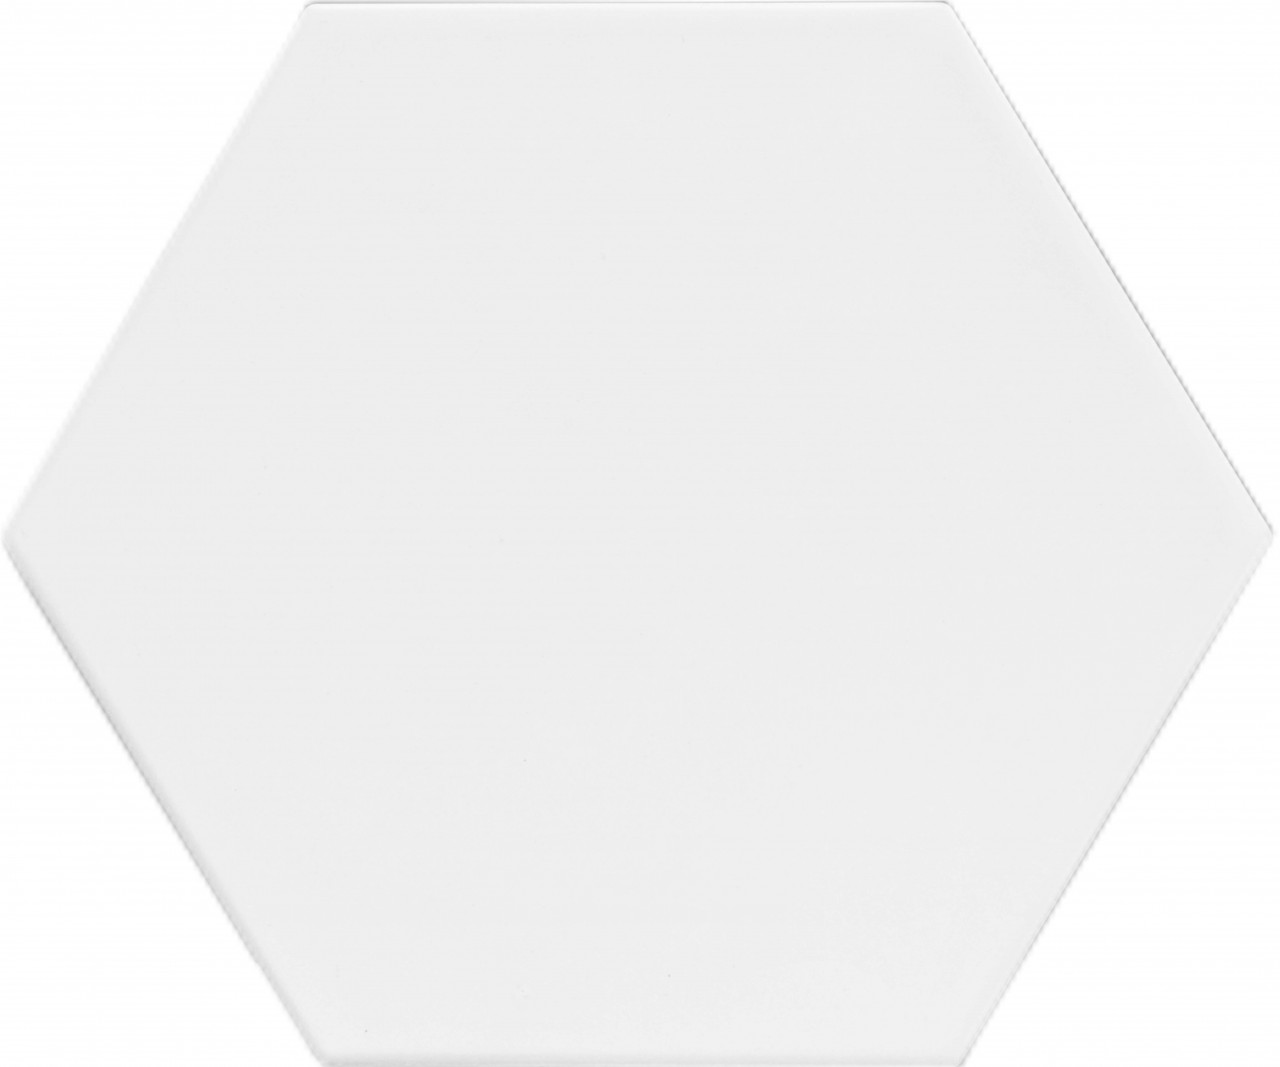 Monopole Hexagono Colors Blanco 20 x 24 cm